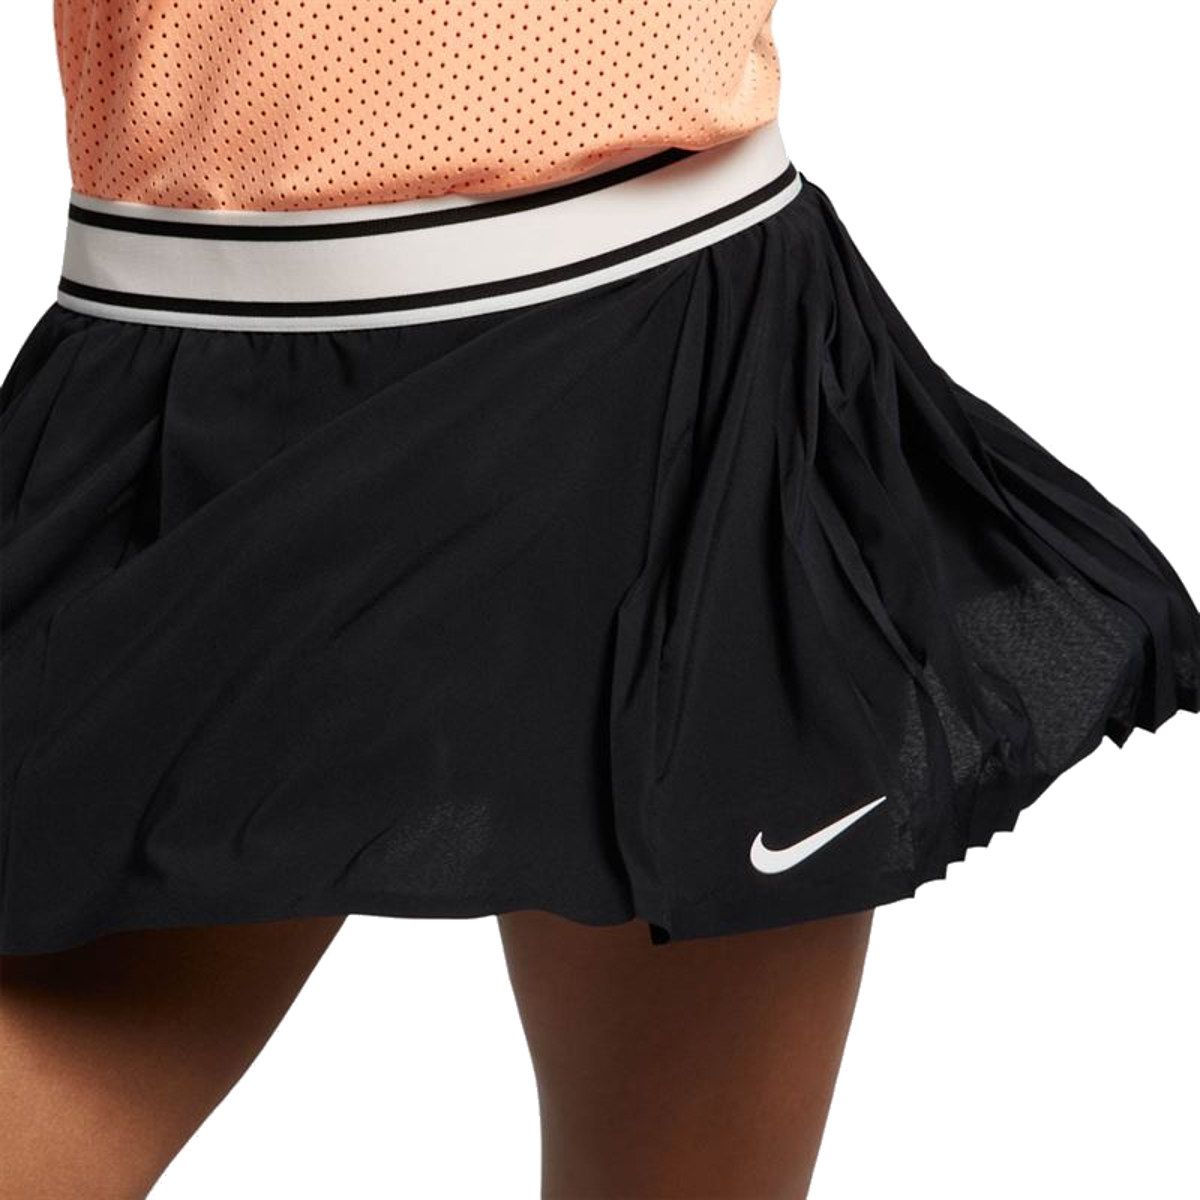 Юбка найк. Юбка Nike Victory Court skirt. Nike Court Victory Tennis skirt. Теннисная юбка Nike Maria плиссированная.